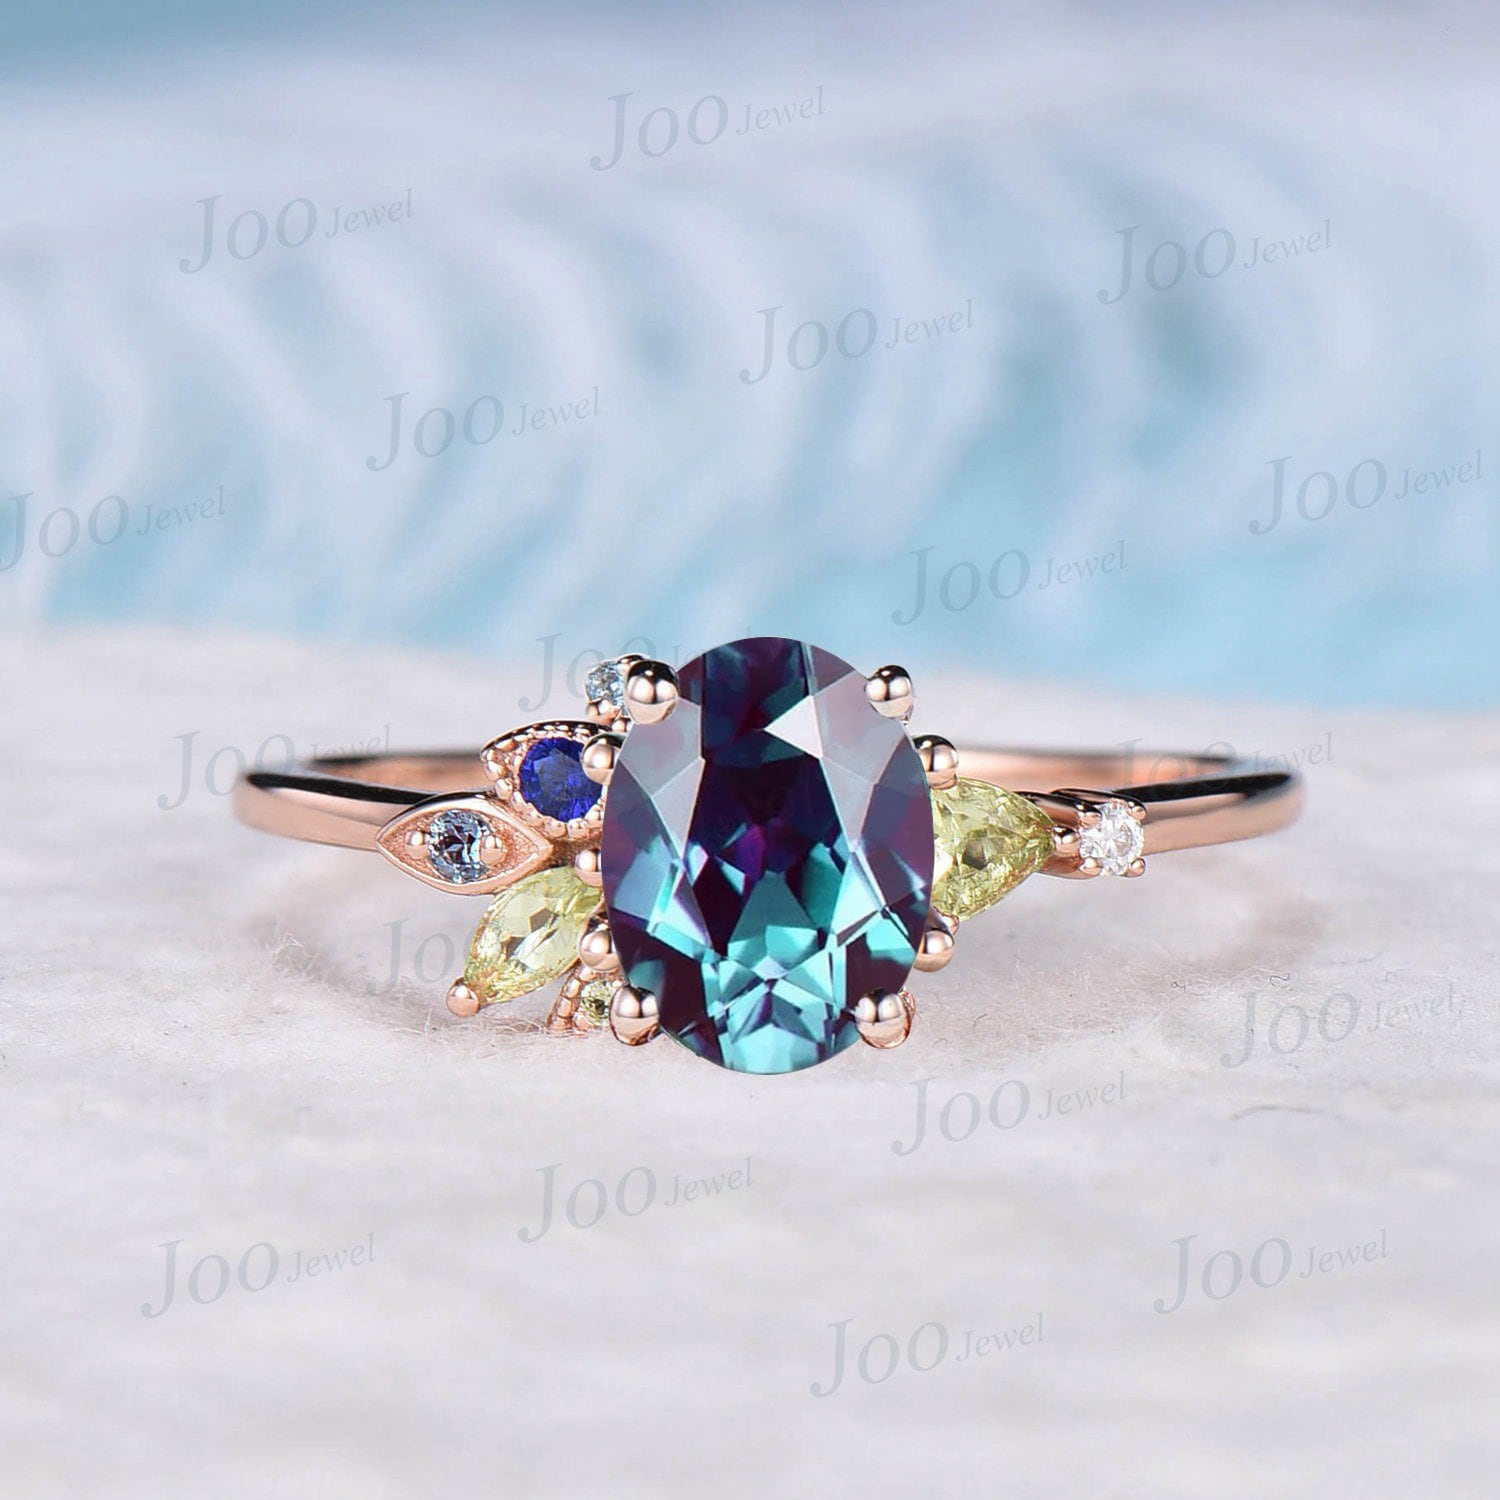 1.5ct Oval Alexandrite Cluster Ring,Customized Birthstone,Peridot,Blue Sapphire,Topaz,Unique Birthday Anniversary Gift,June Birthstone Ring